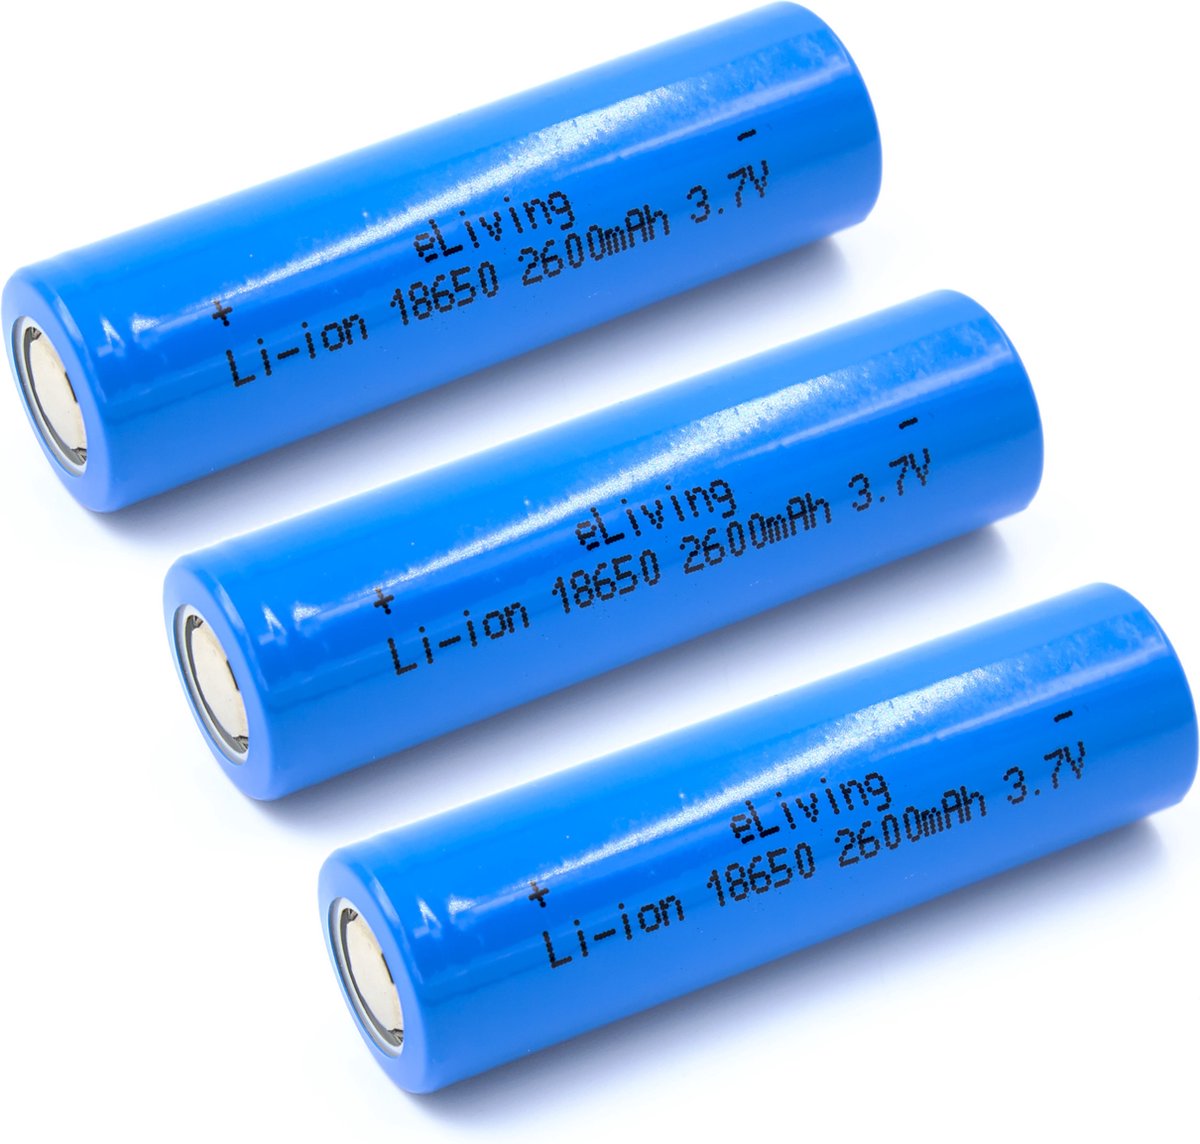 eLiving 18650 3.7V Flat Top batterijen. 2600mA, Li-ion. 65x18mm. 3 stuks.